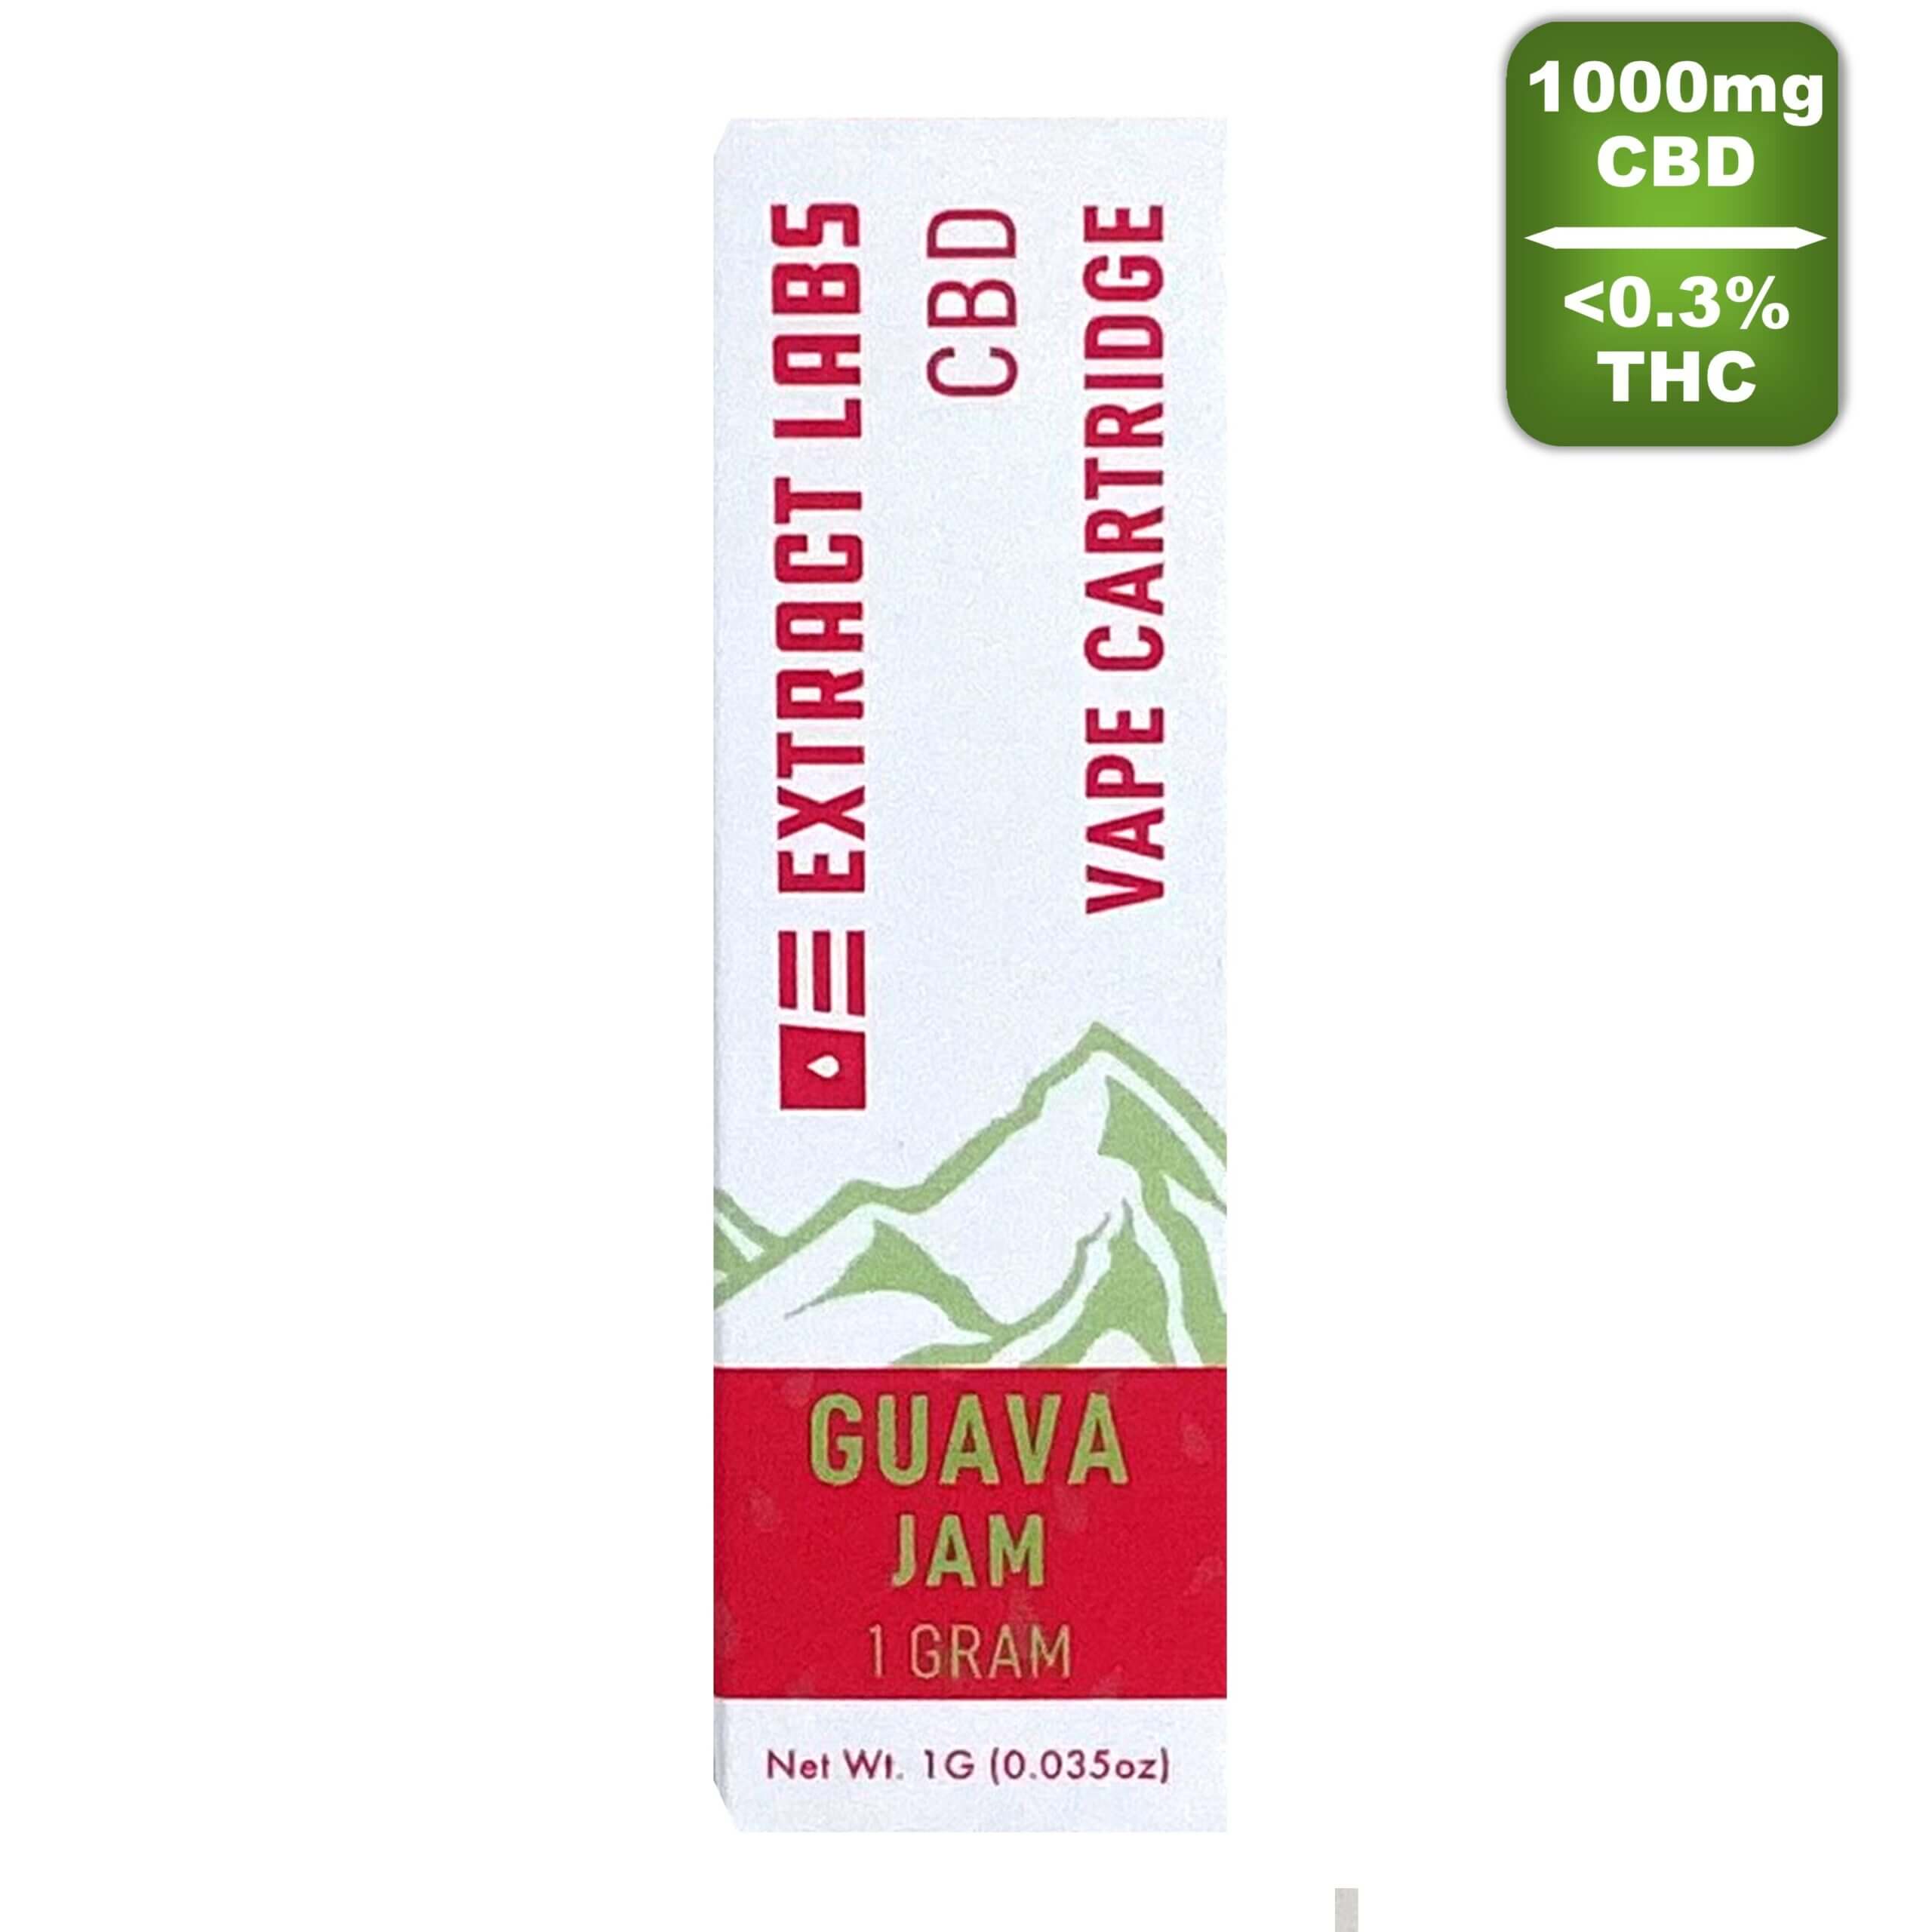 Extract Labs - Guava Jam Vape cartridge CBD + THC